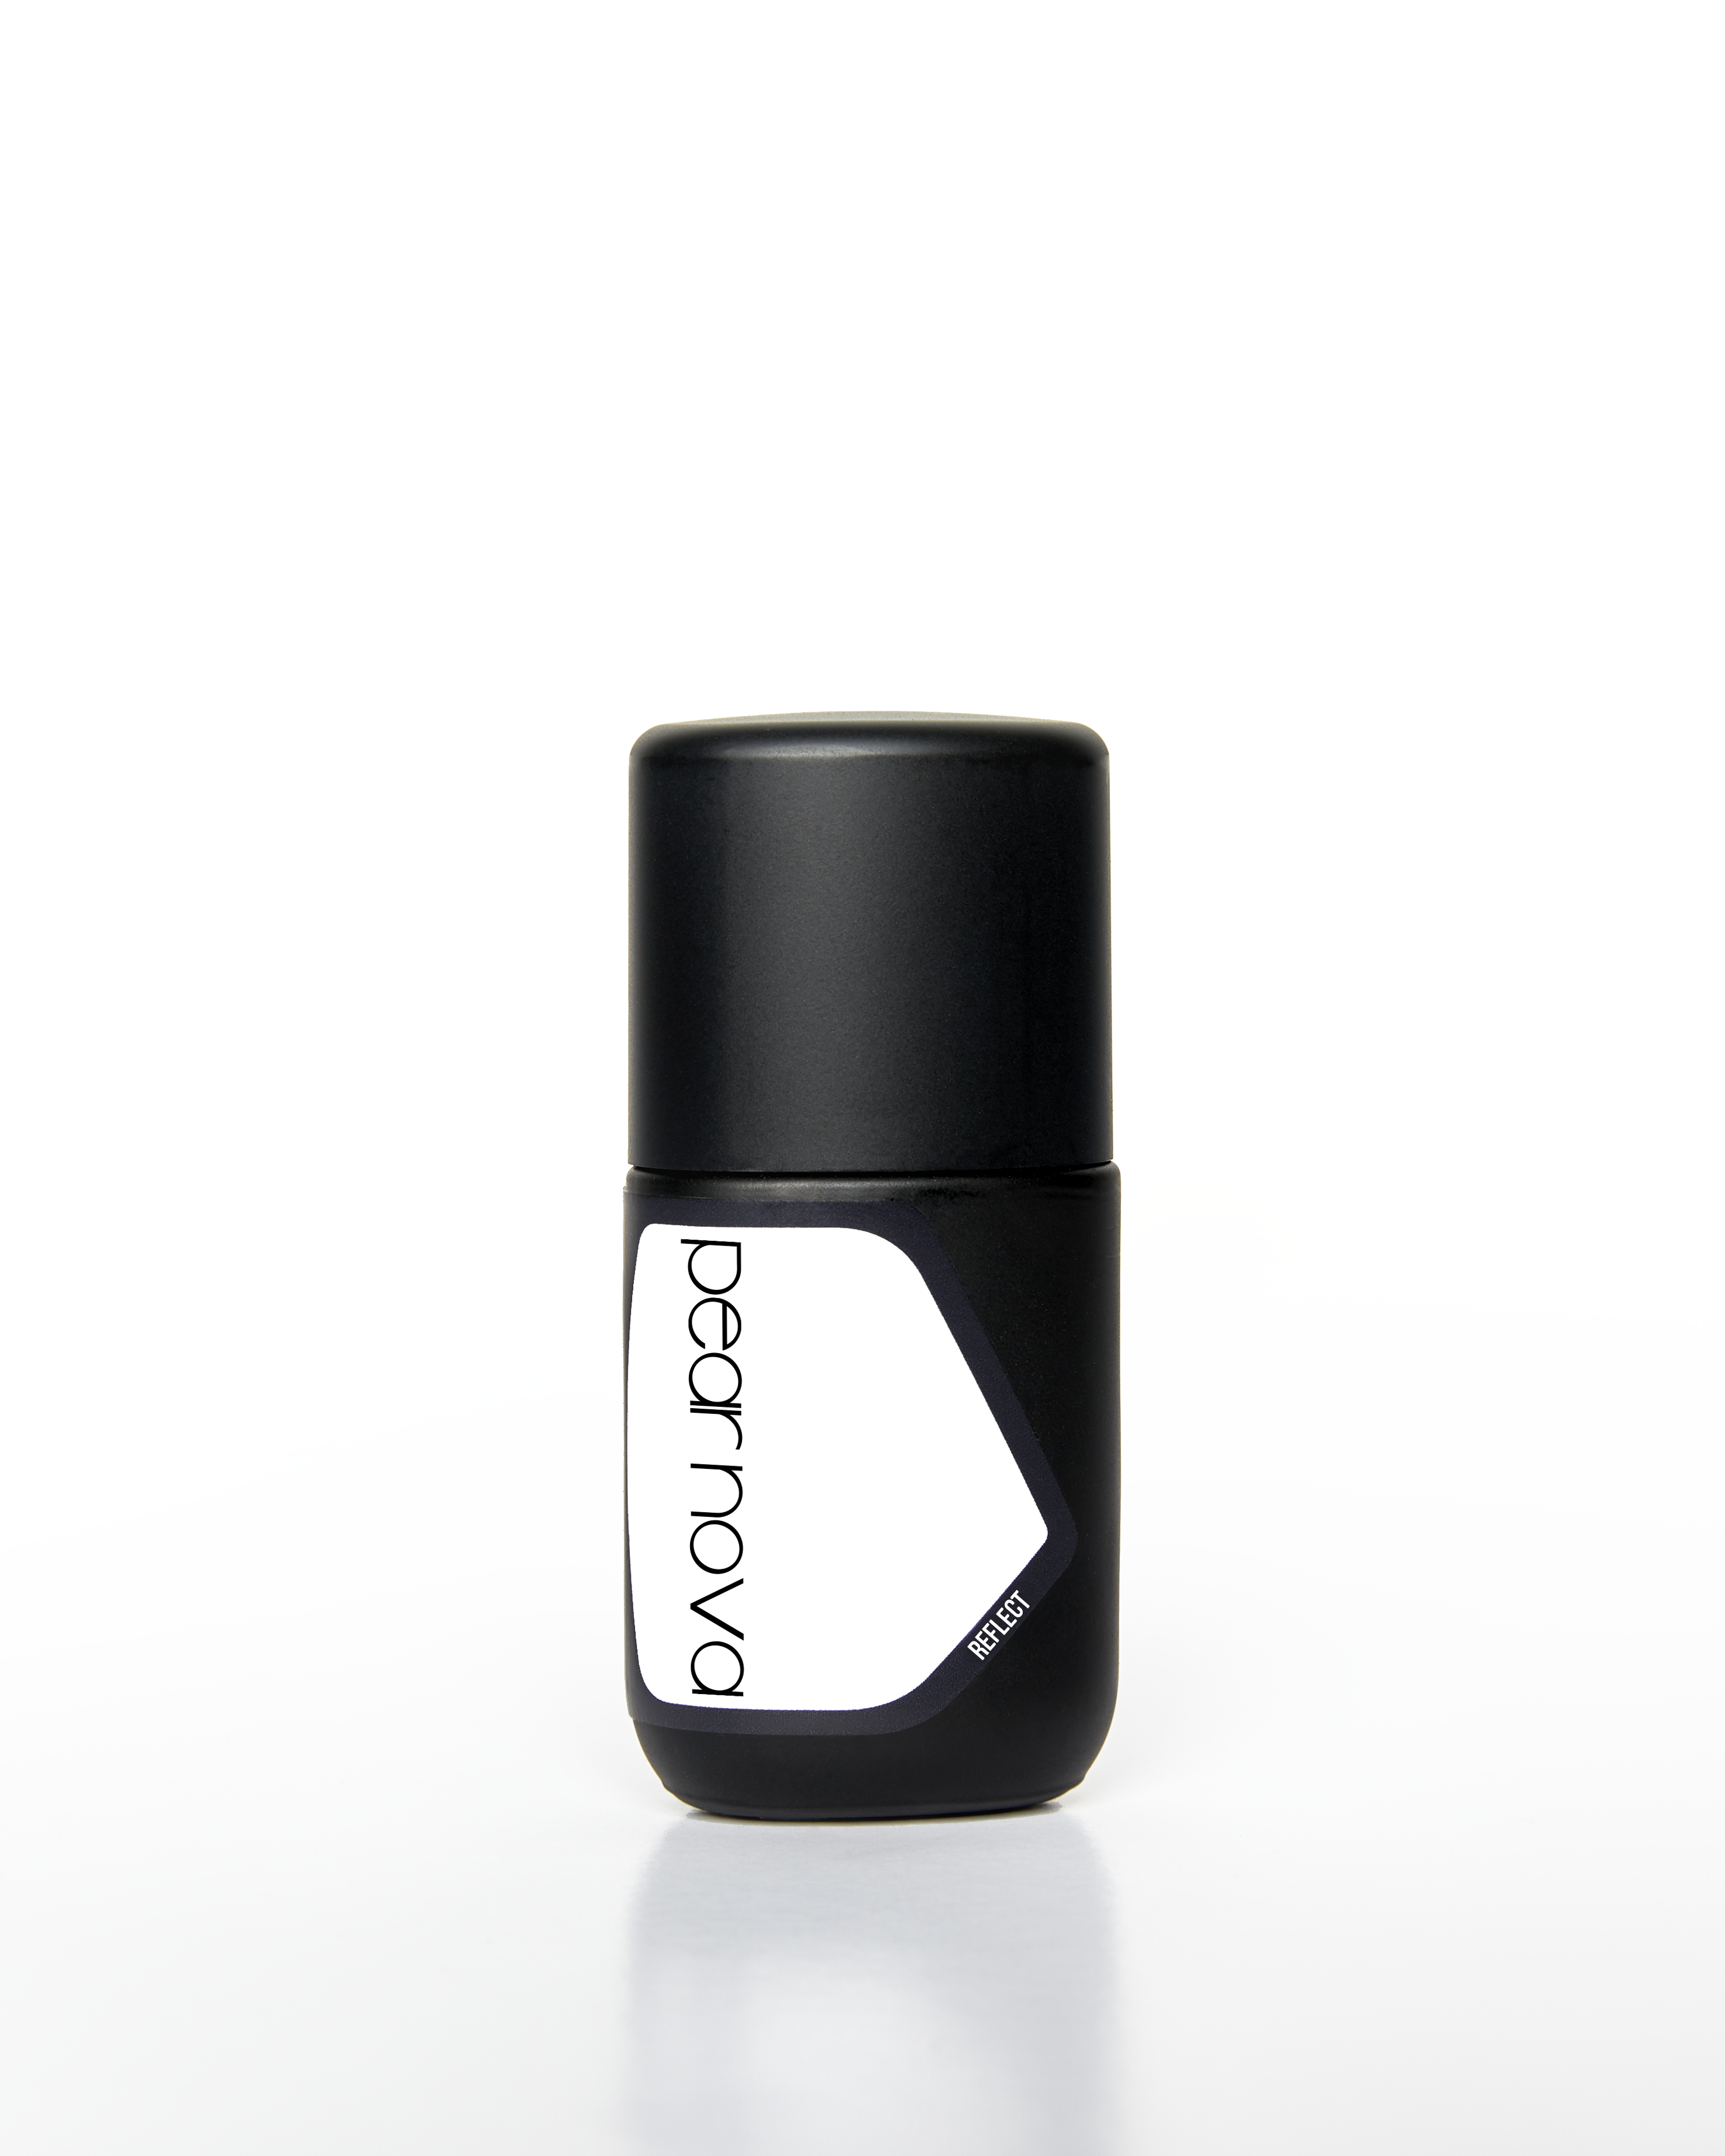 bottle of Reflect gel nail polish